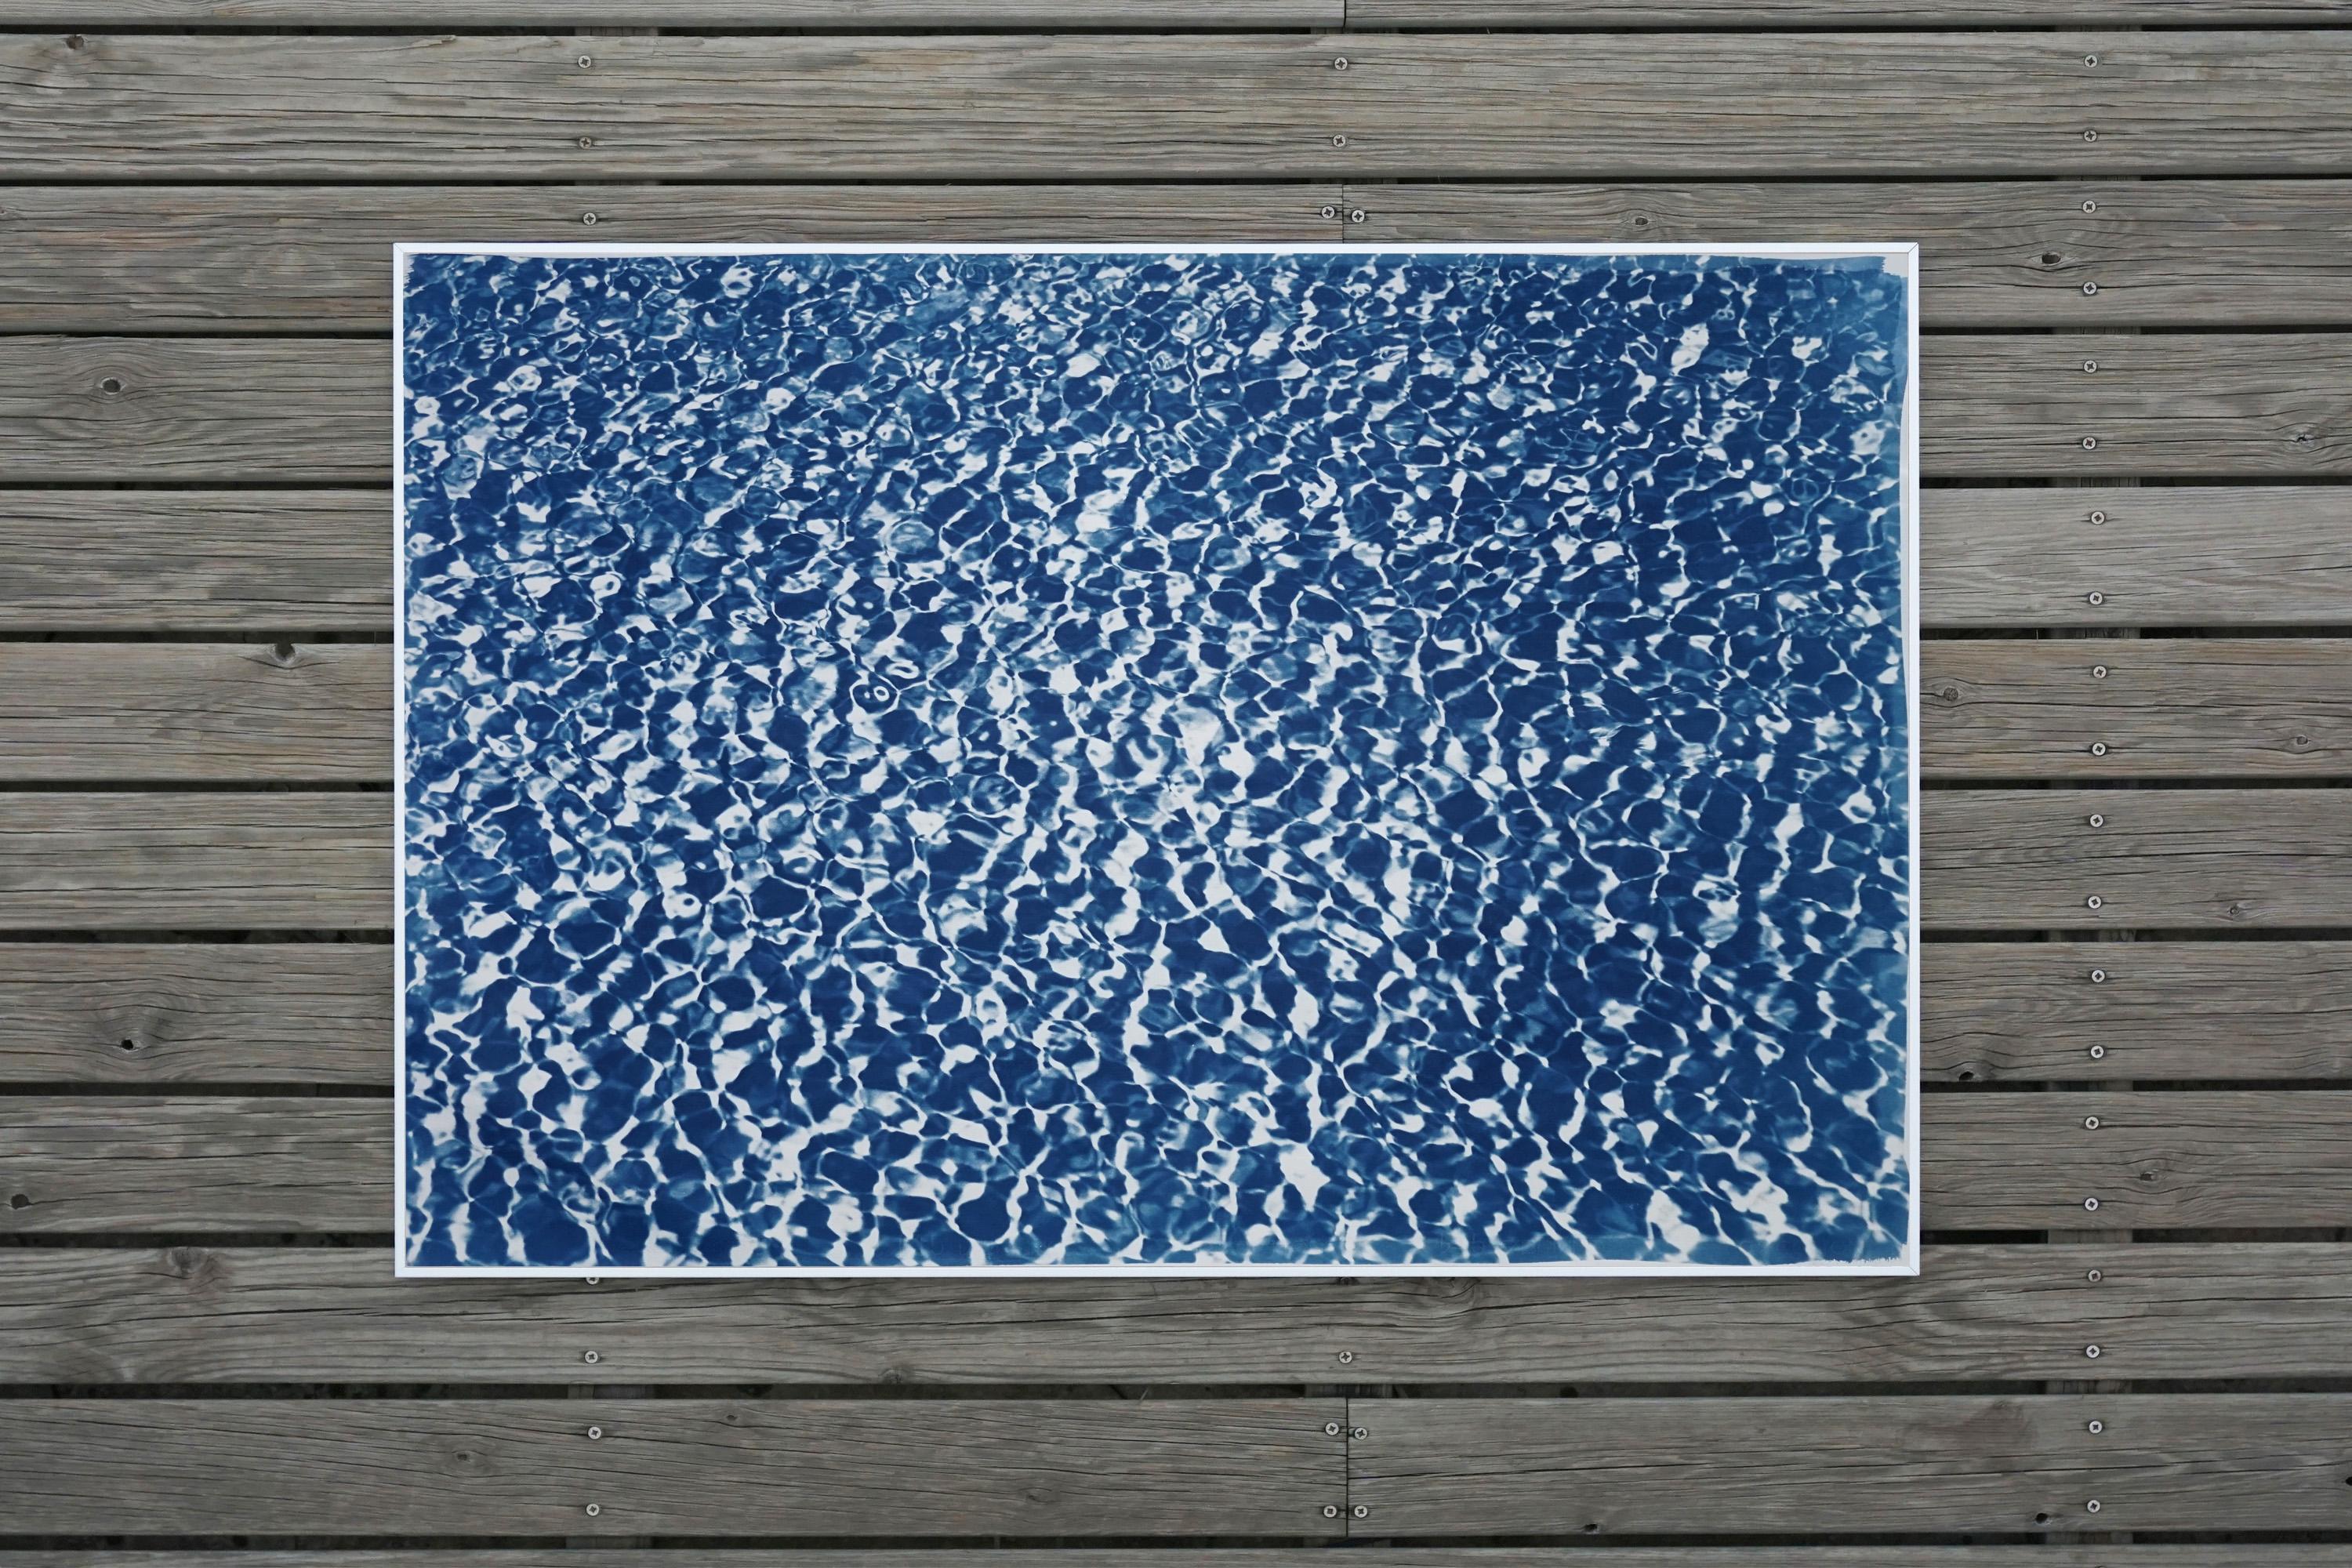 Infinity Pool Water Reflections, Blue & White Pattern, Handmade Cyanotype Print 4